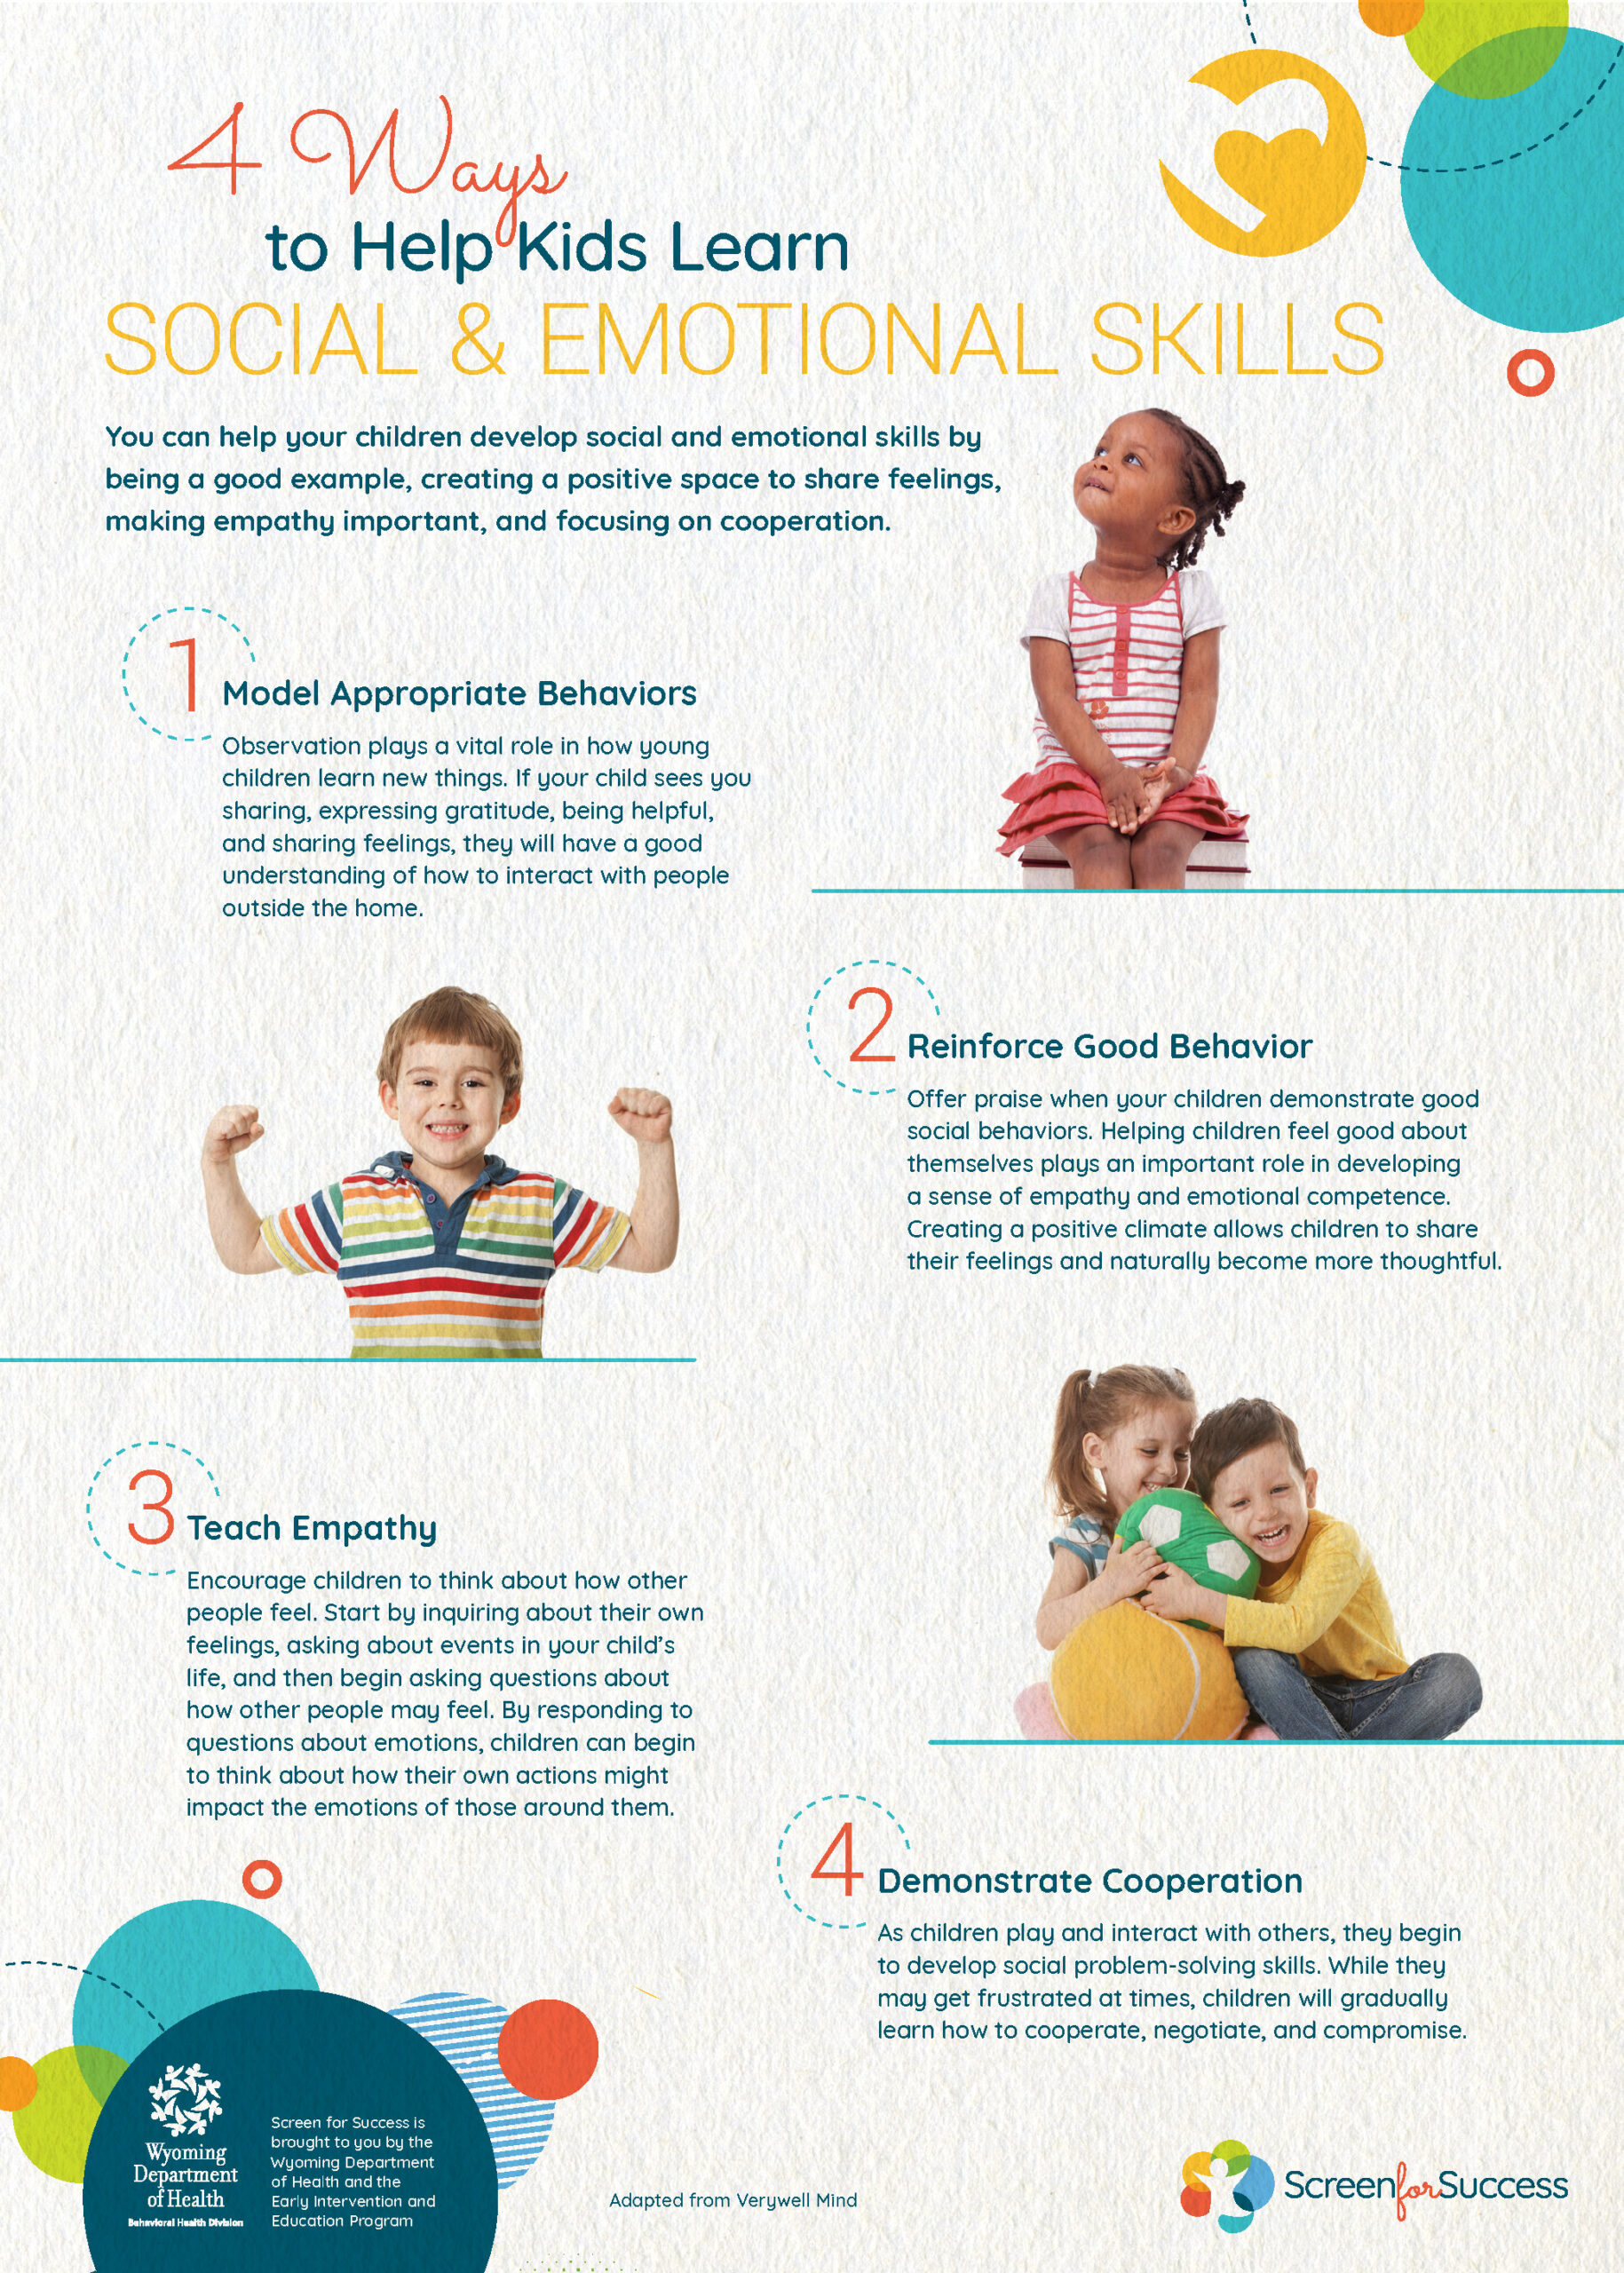 4 Ways to Help Kids Learn Social & Emotional Skills